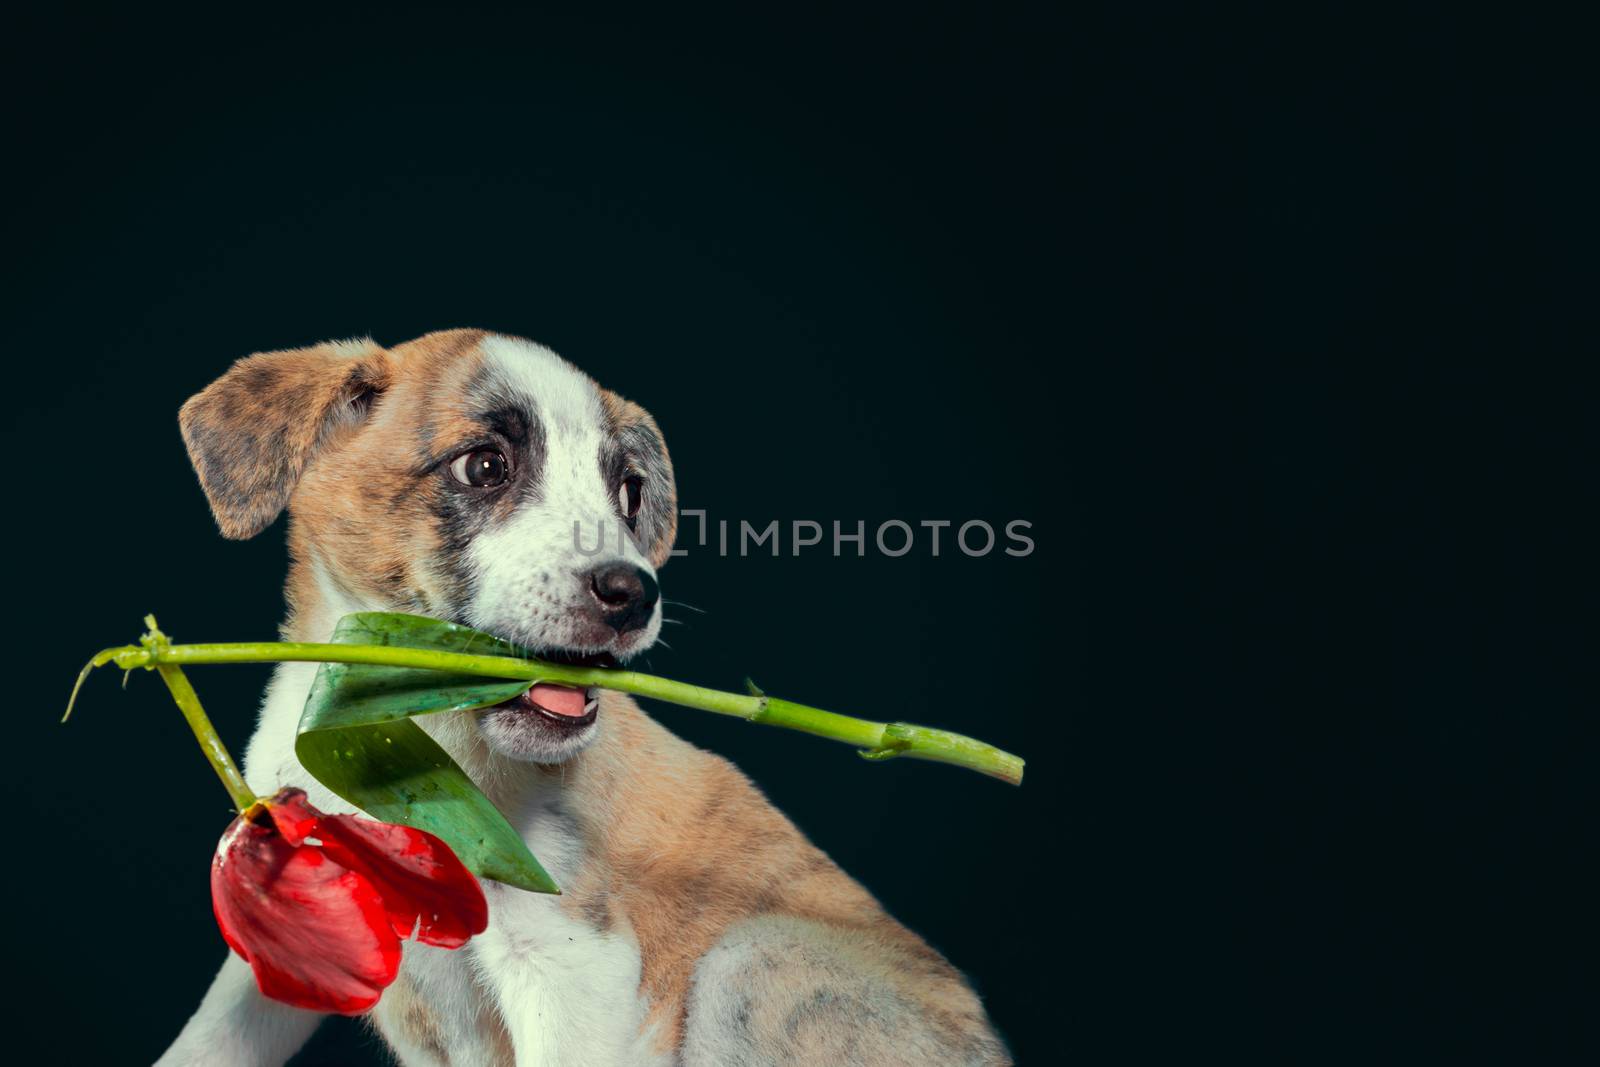 cute piebald puppy keeping in teeth a tulip flower at dark background